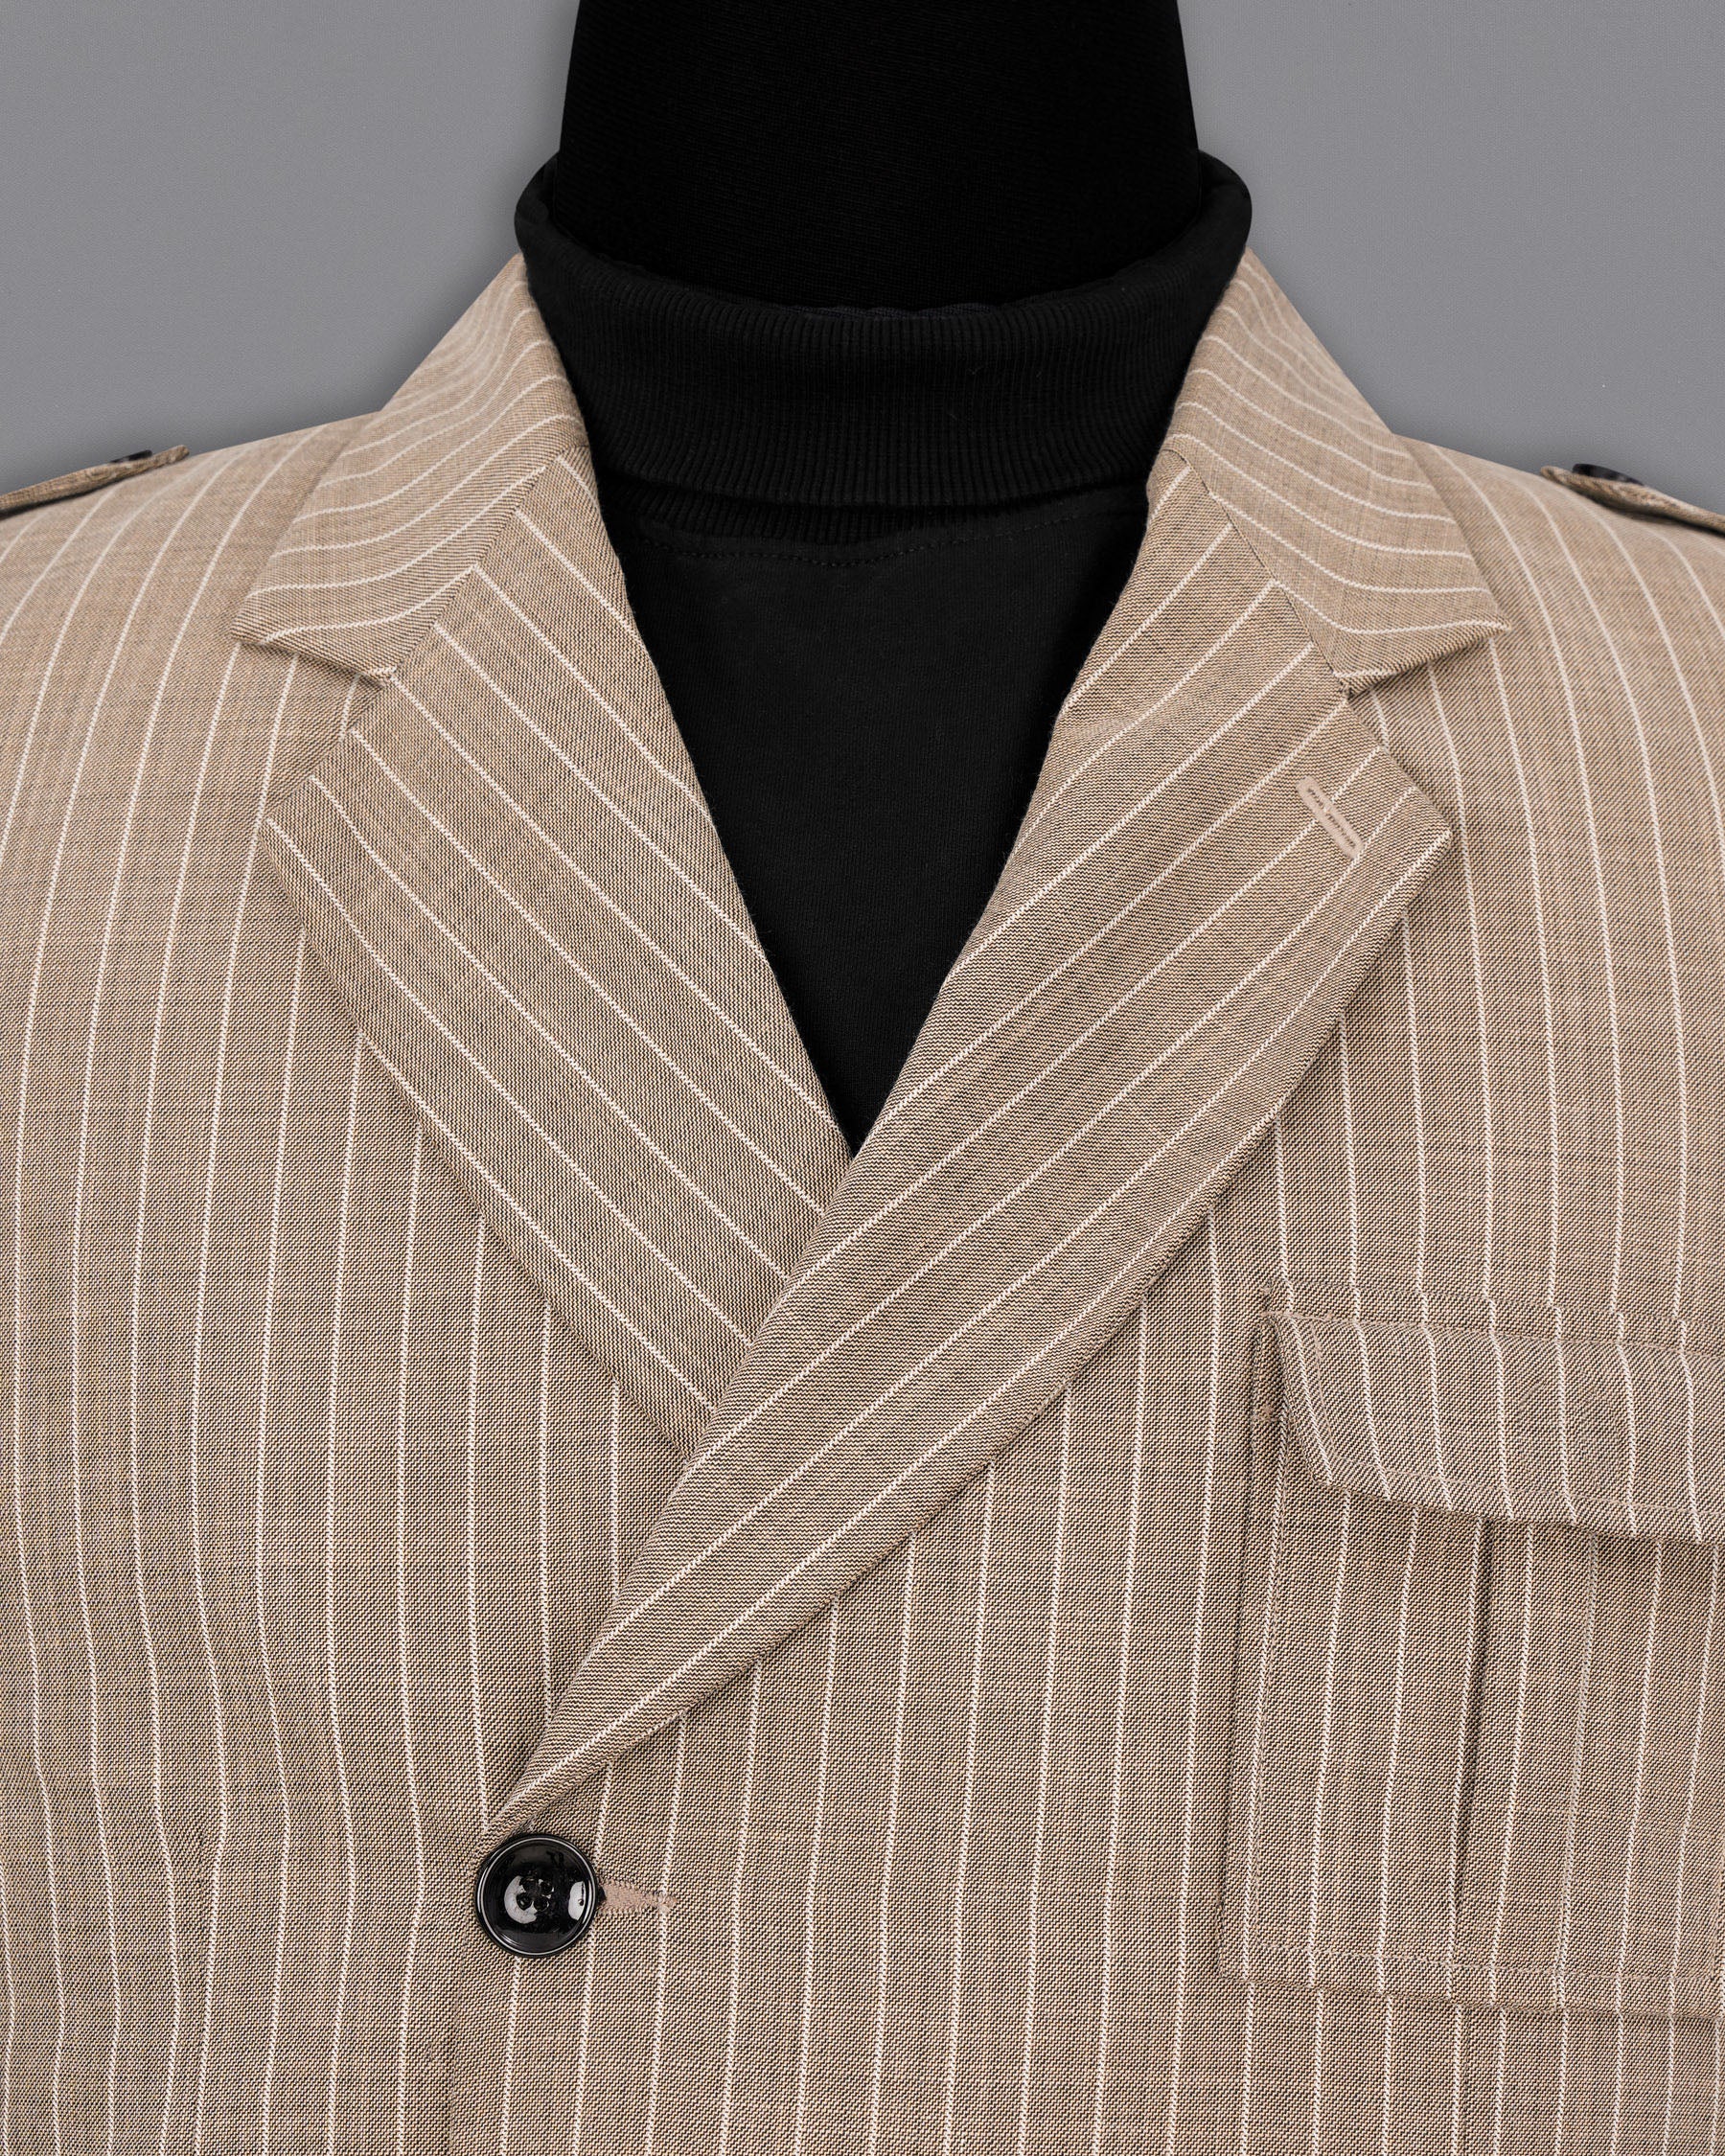 Hemp Brown Striped Designer Sports Suit